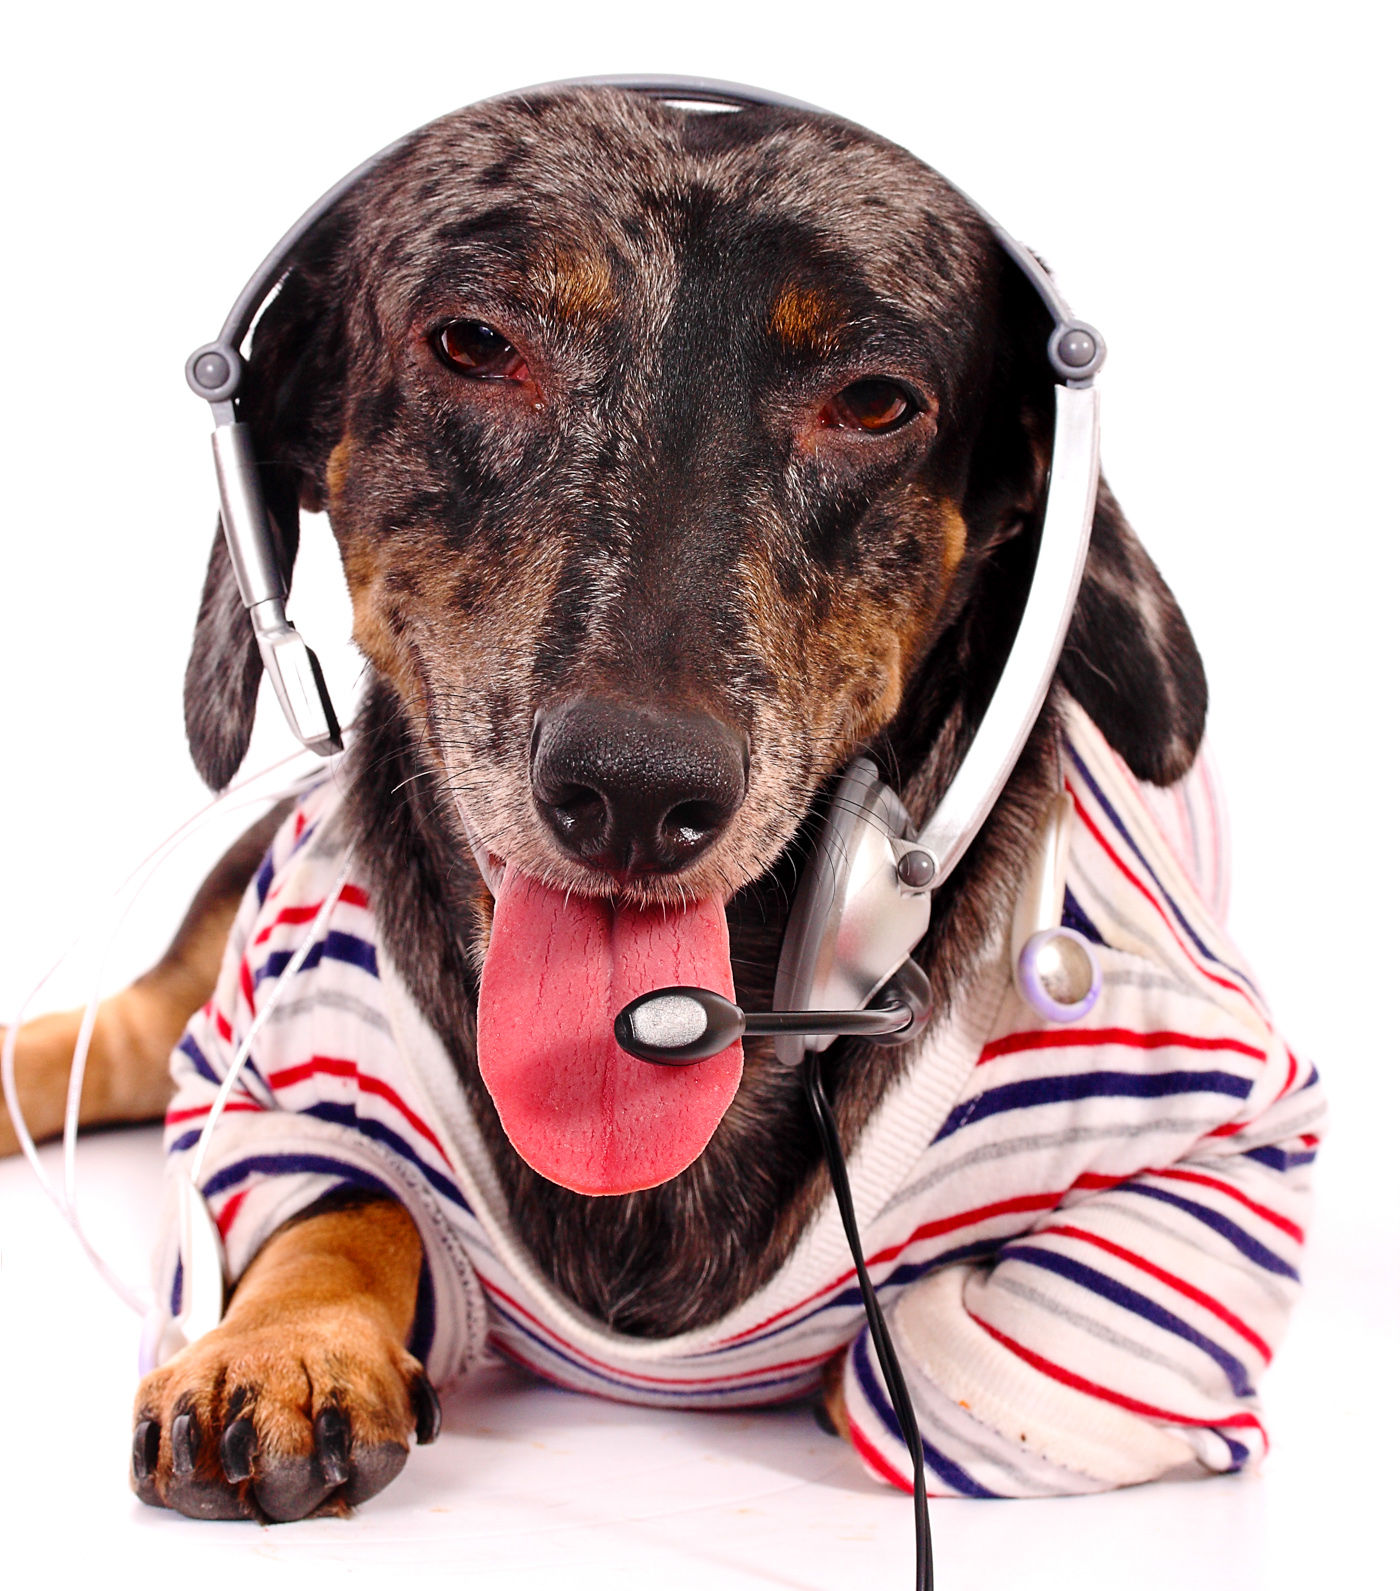 Telemarketing dog giving customer service photo